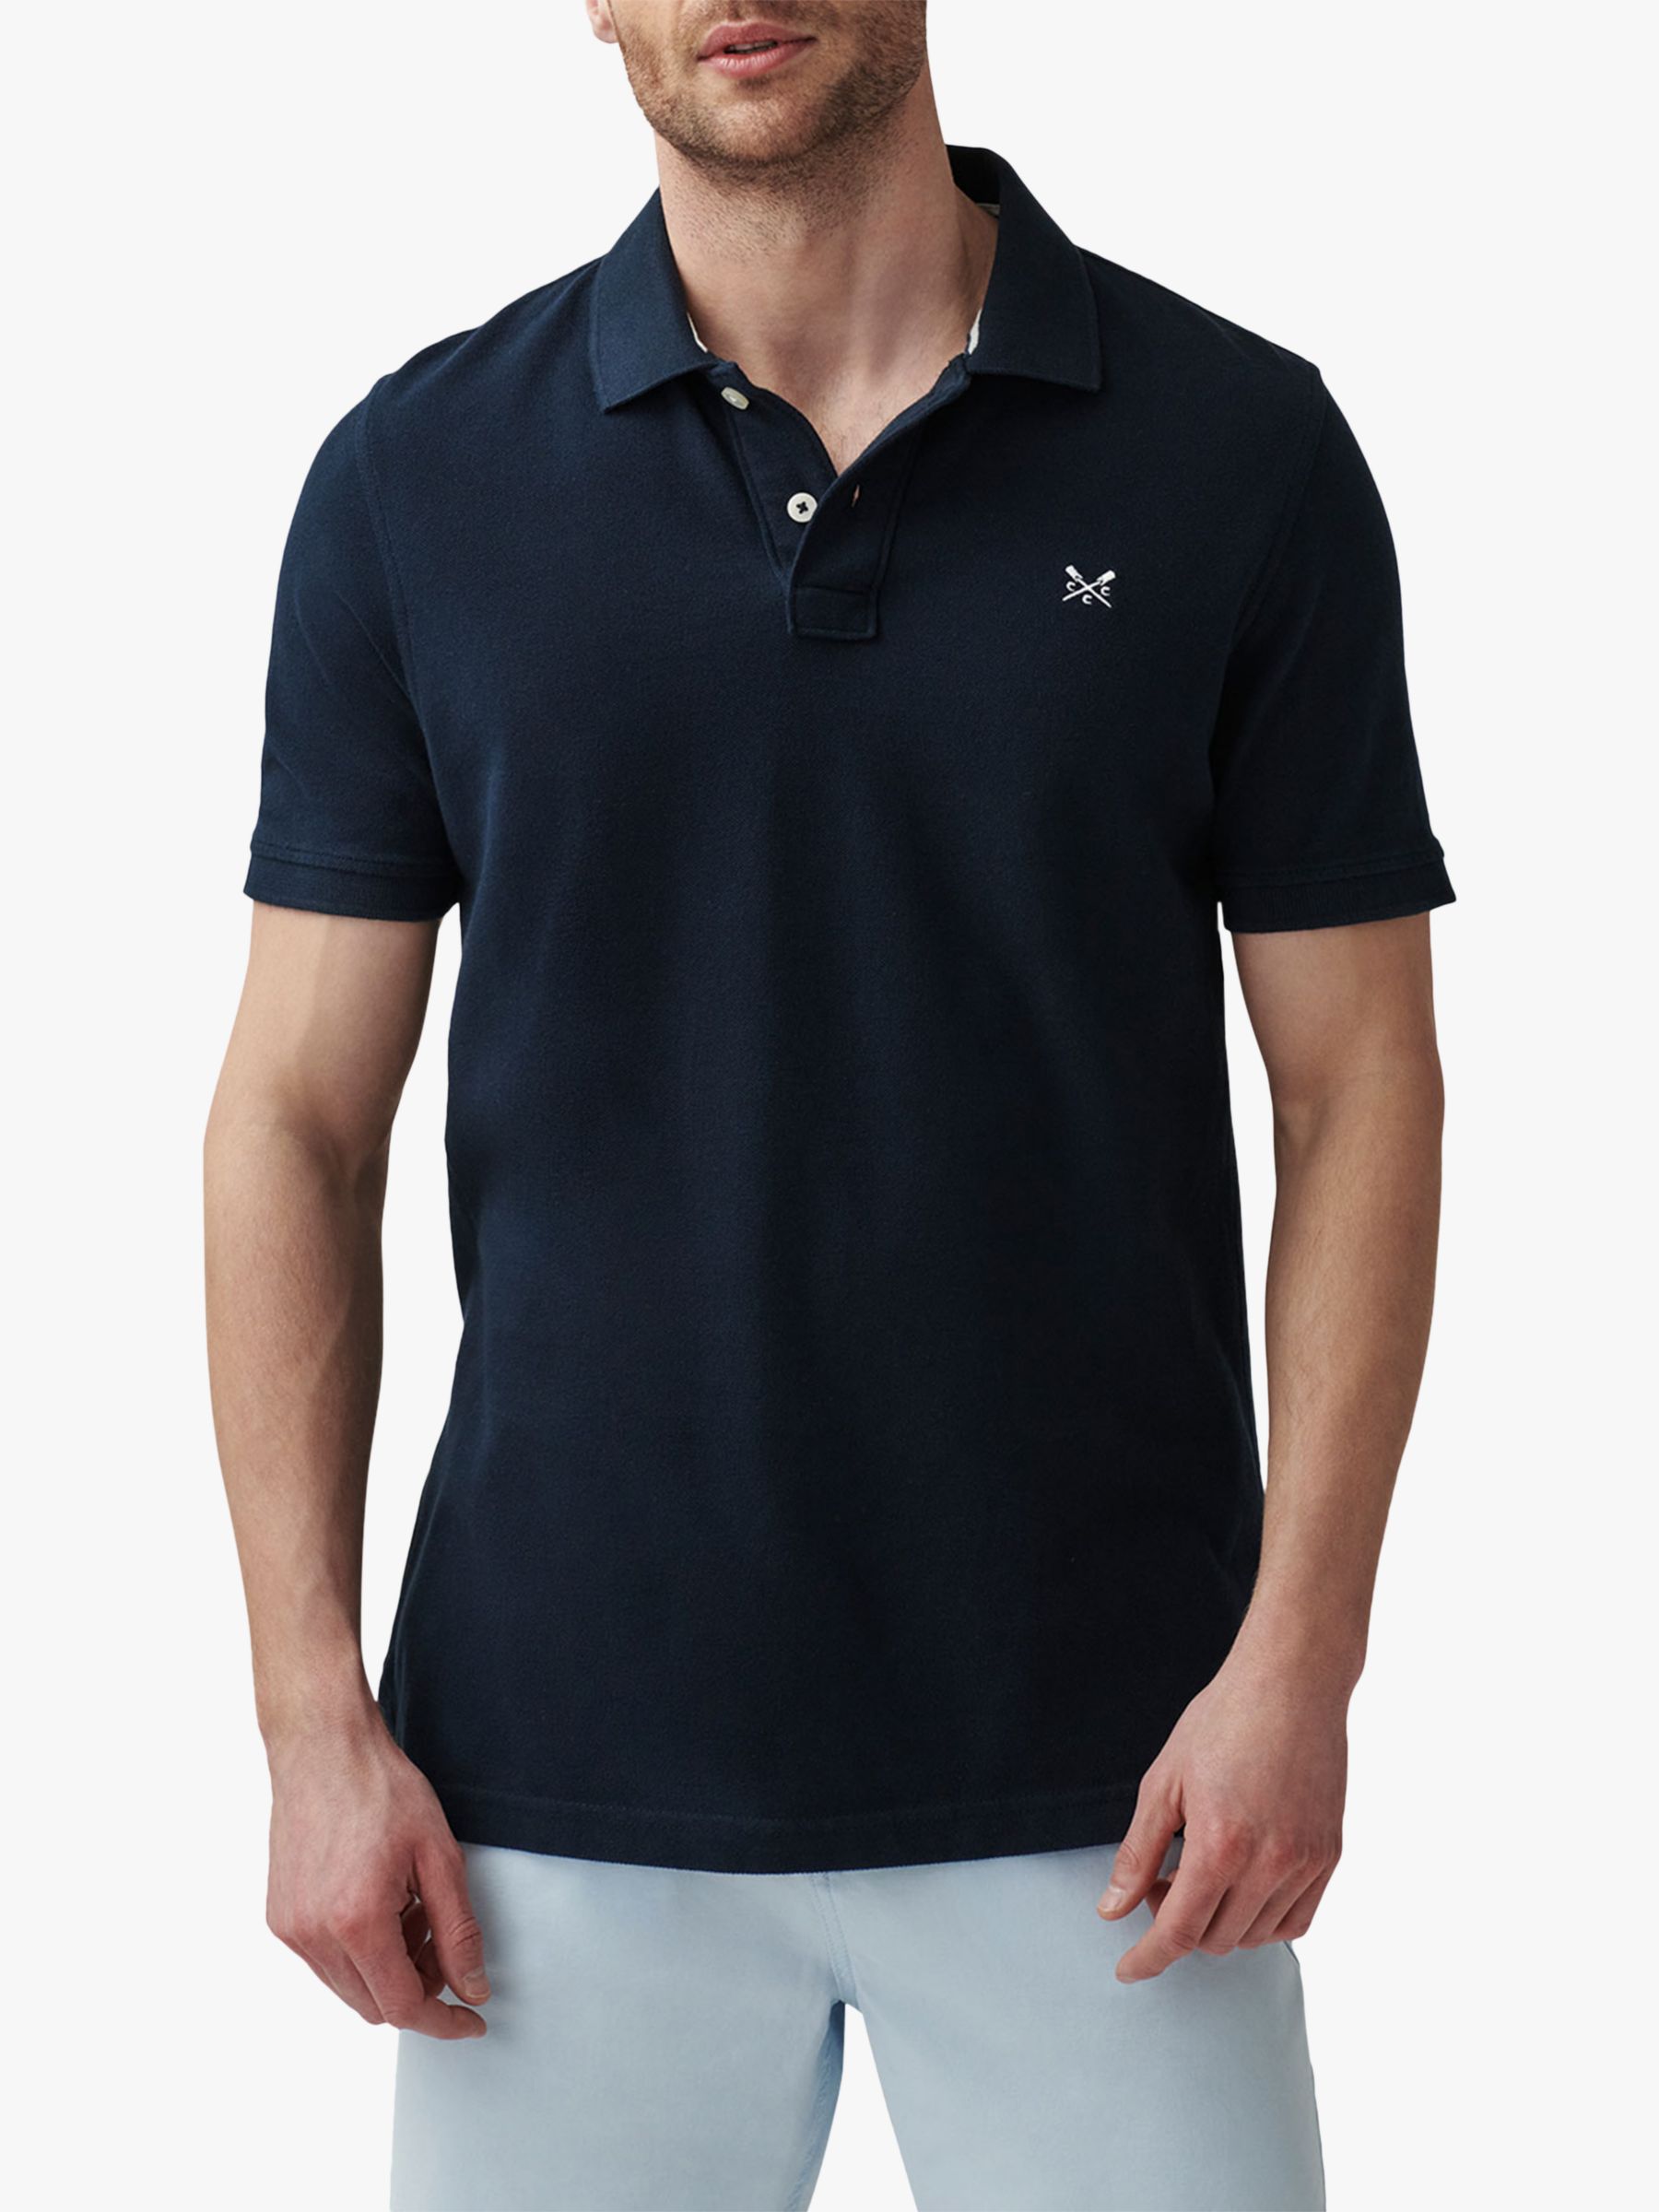 Men's Fashion T-Shirts and Polo Shirts